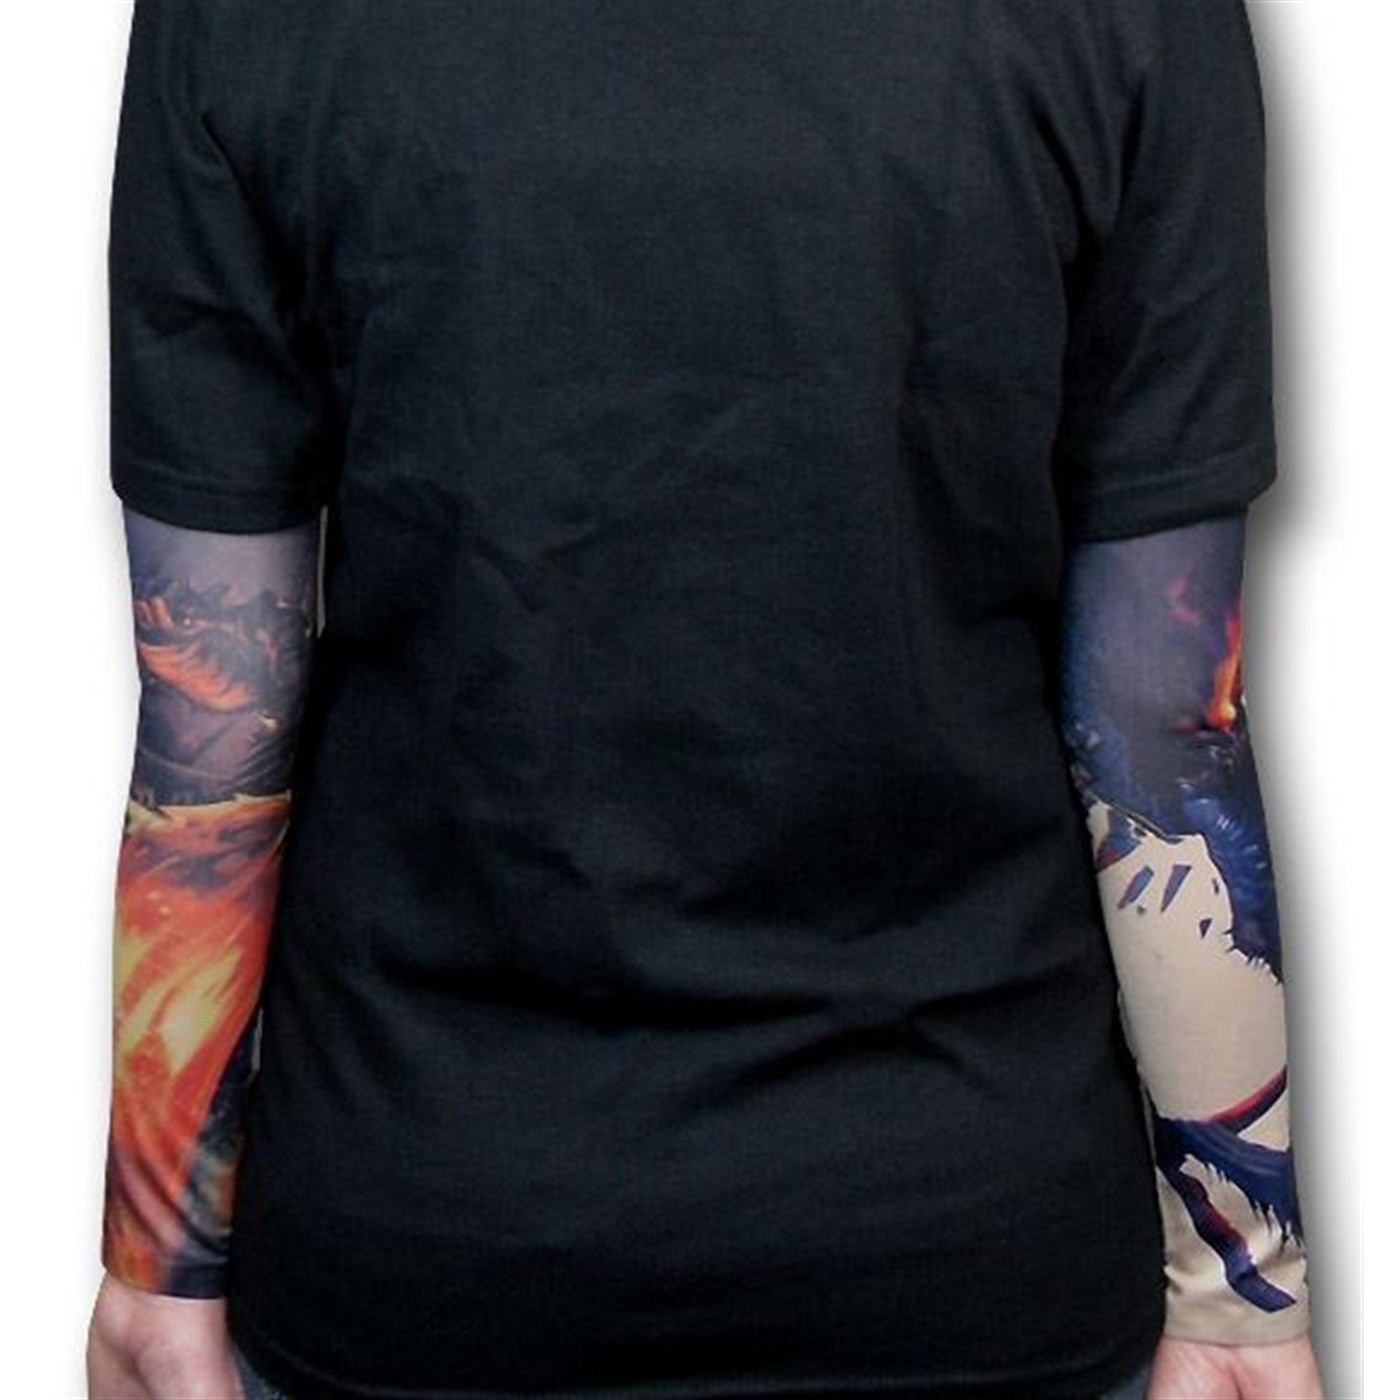 EZI 2 Pcs Fake Nylon Kid Temporary Fake Tattoo Sleeves Arm Stockings Goth  Punk Cool Child # 7600522 on OnBuy